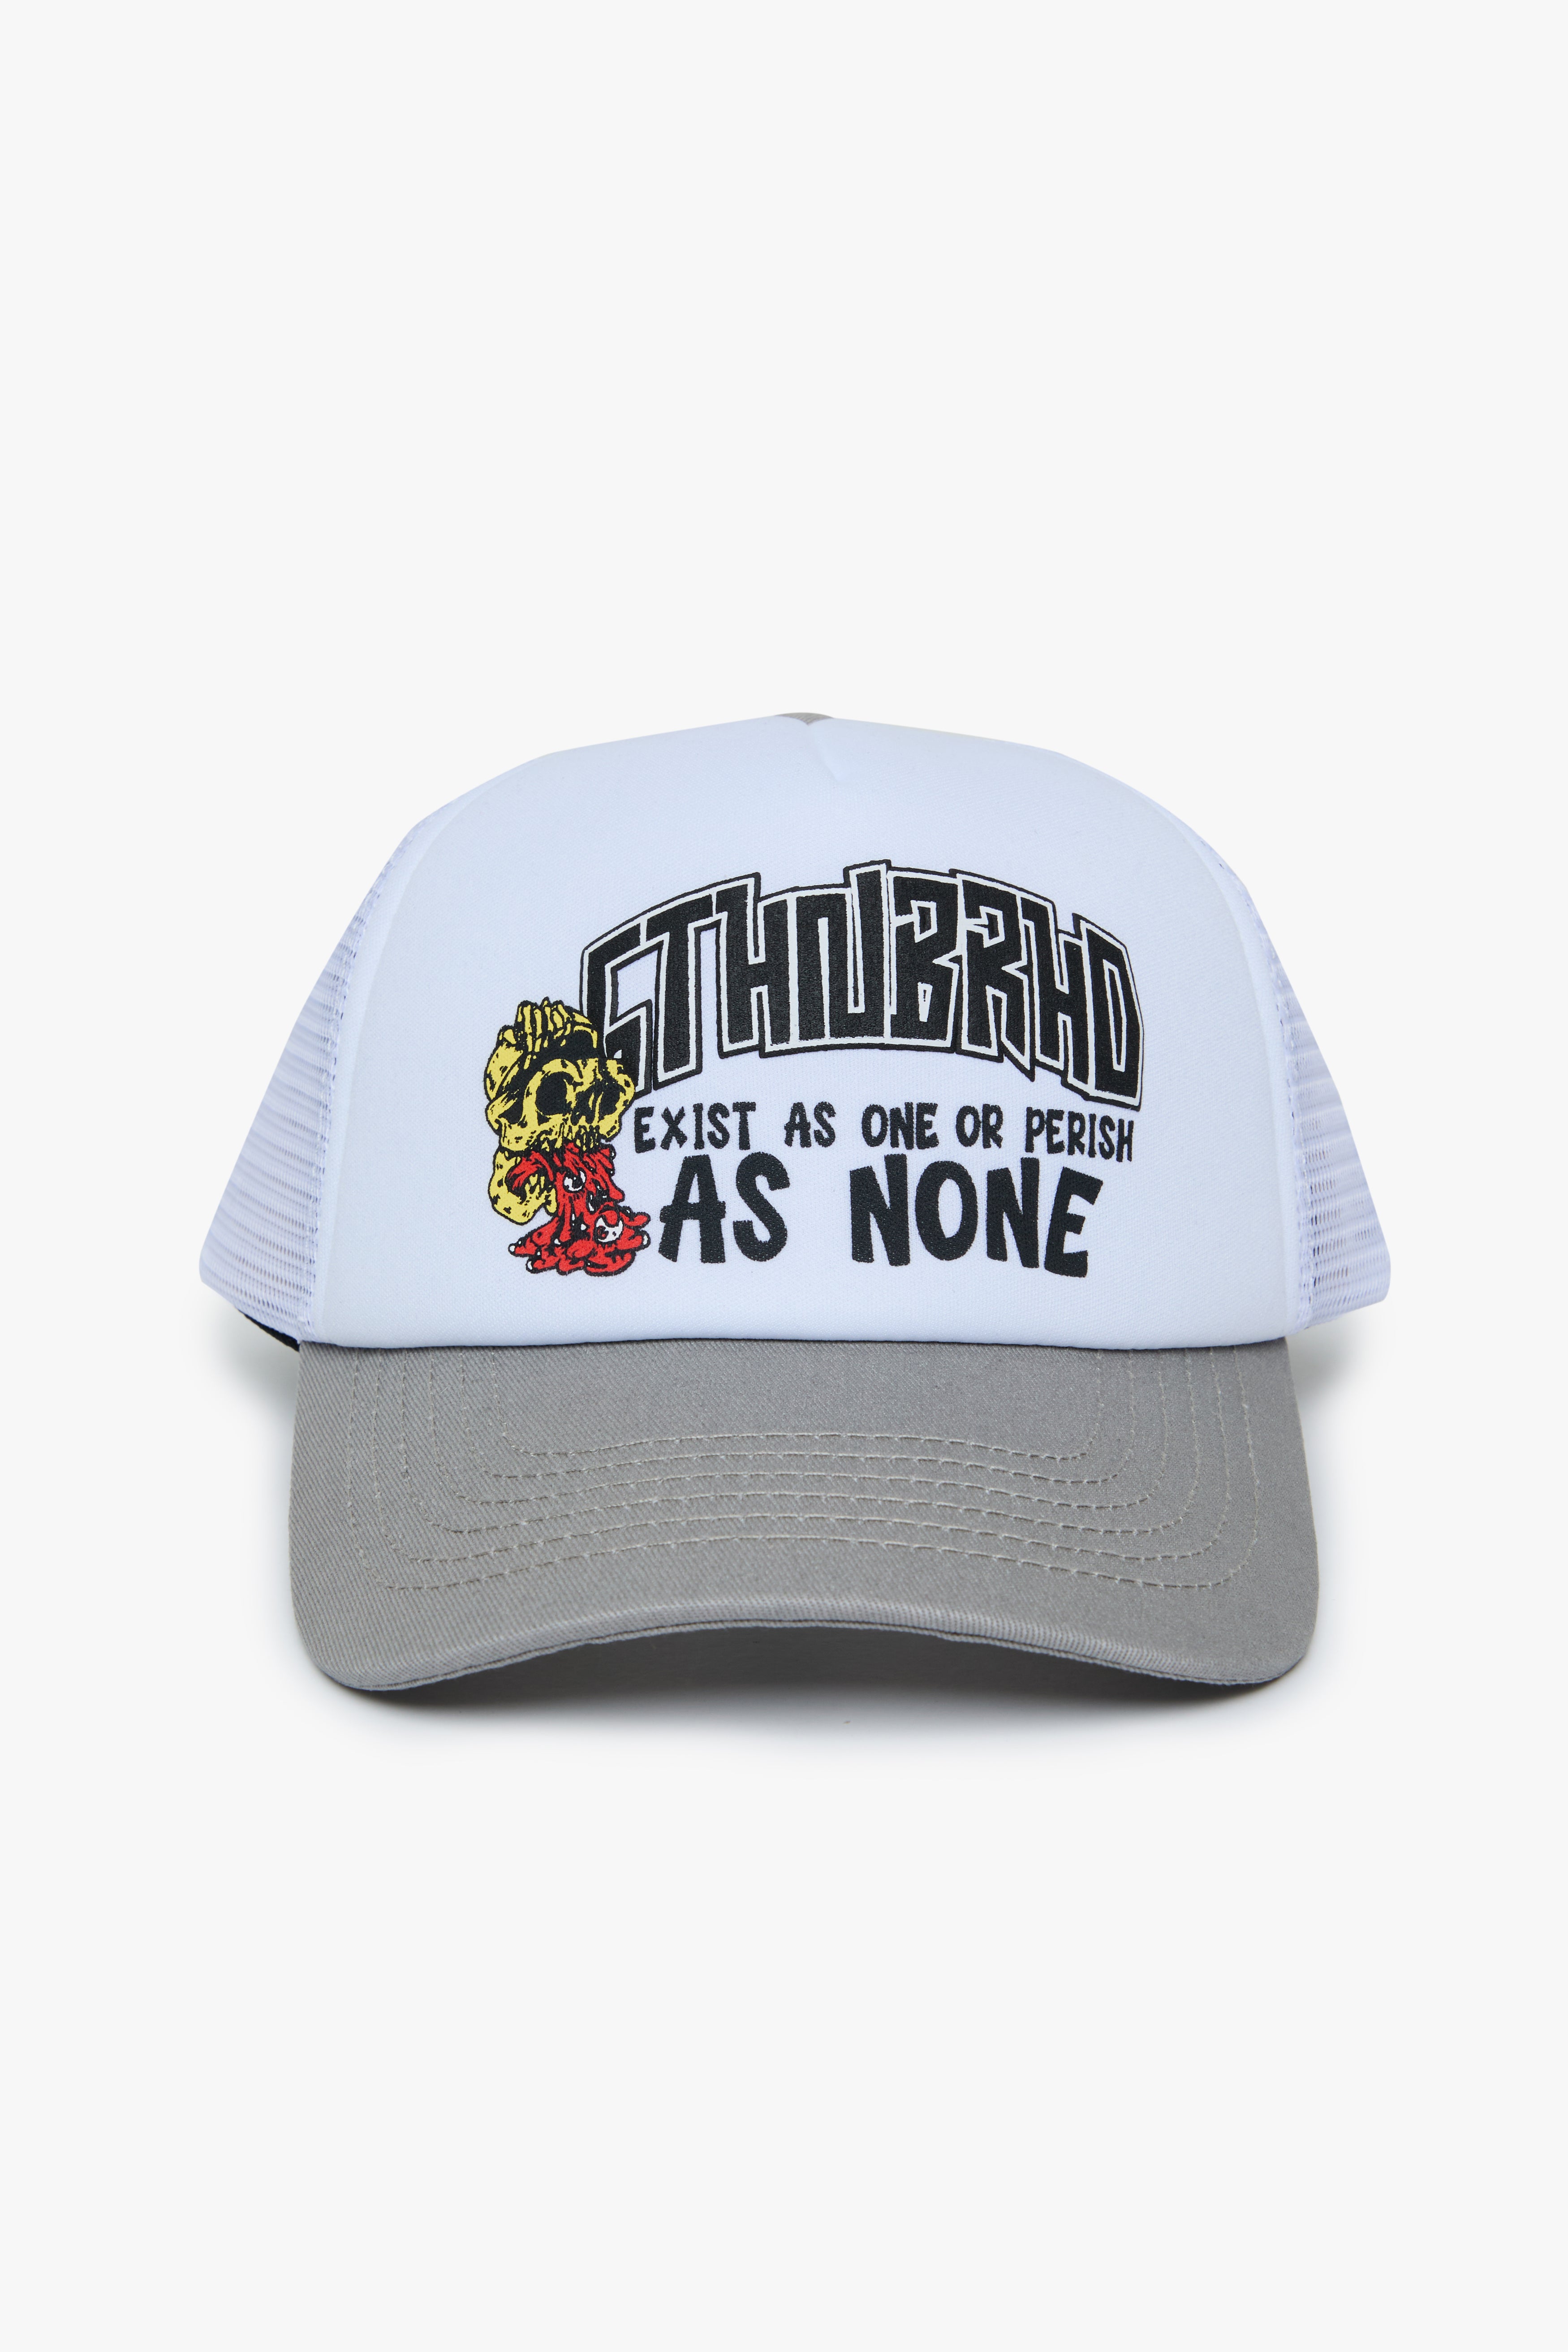 6thNBRHD HAT "EXIST" -WHT/GRY